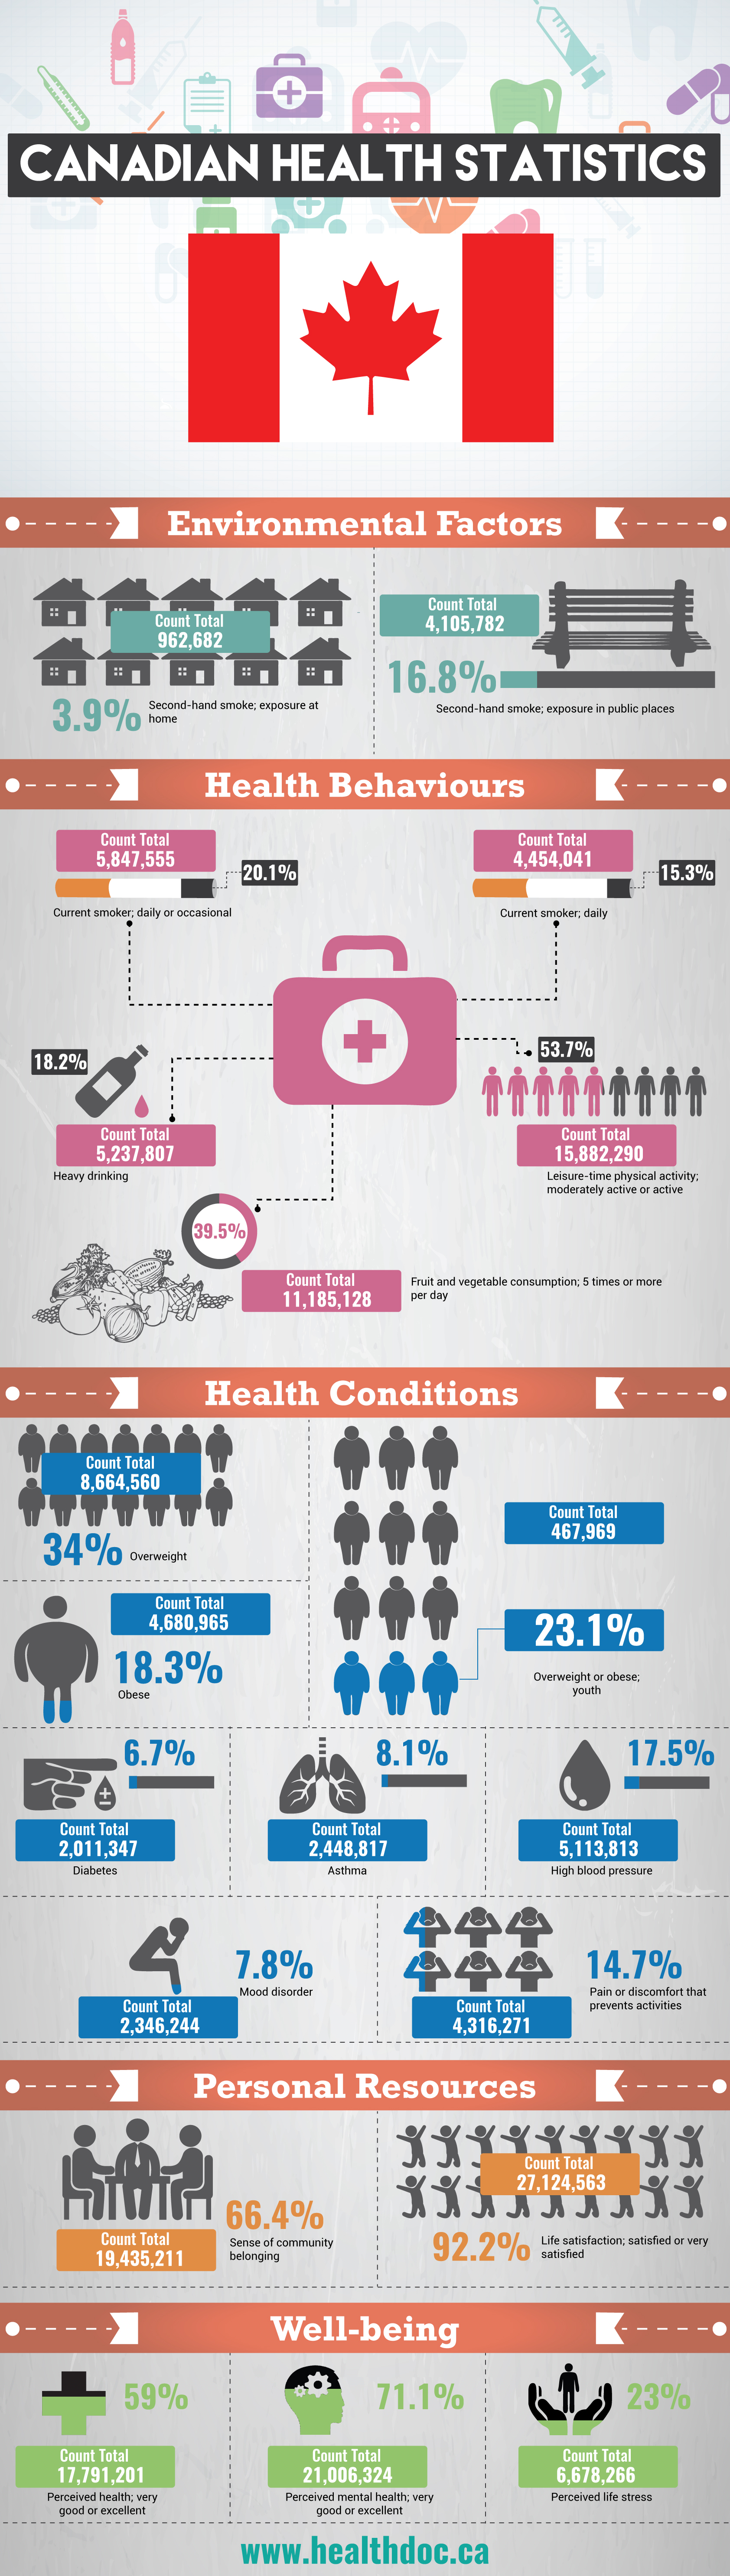 Canadian Health Statistics